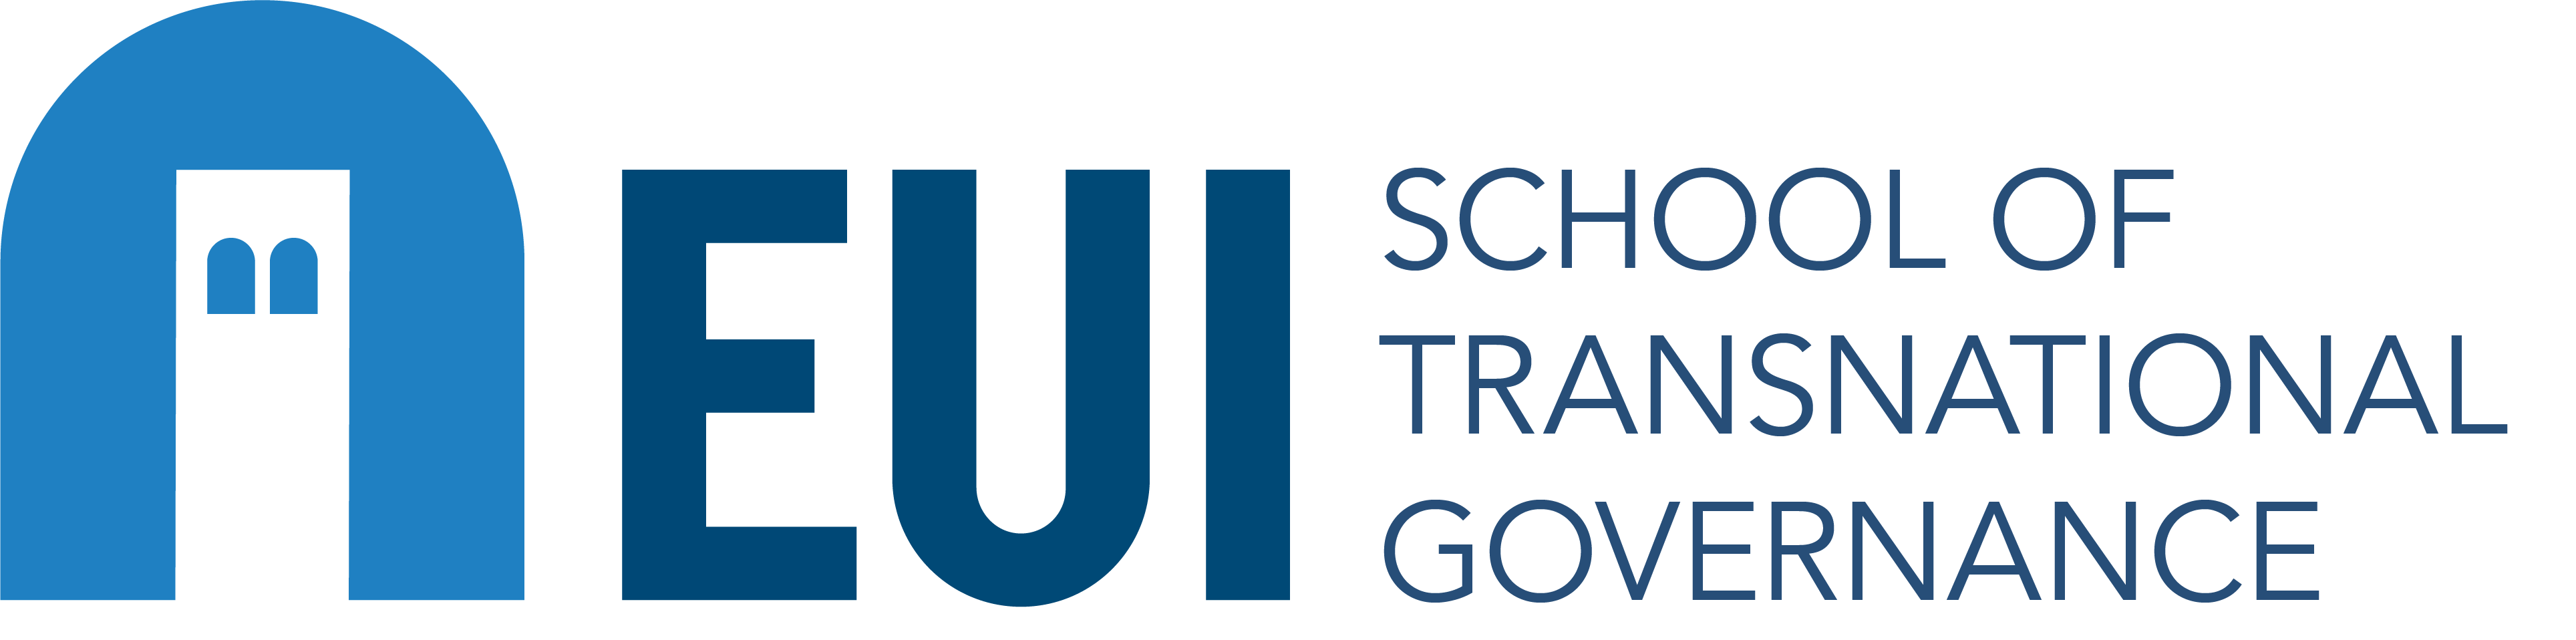 School of Transnational Governance logo